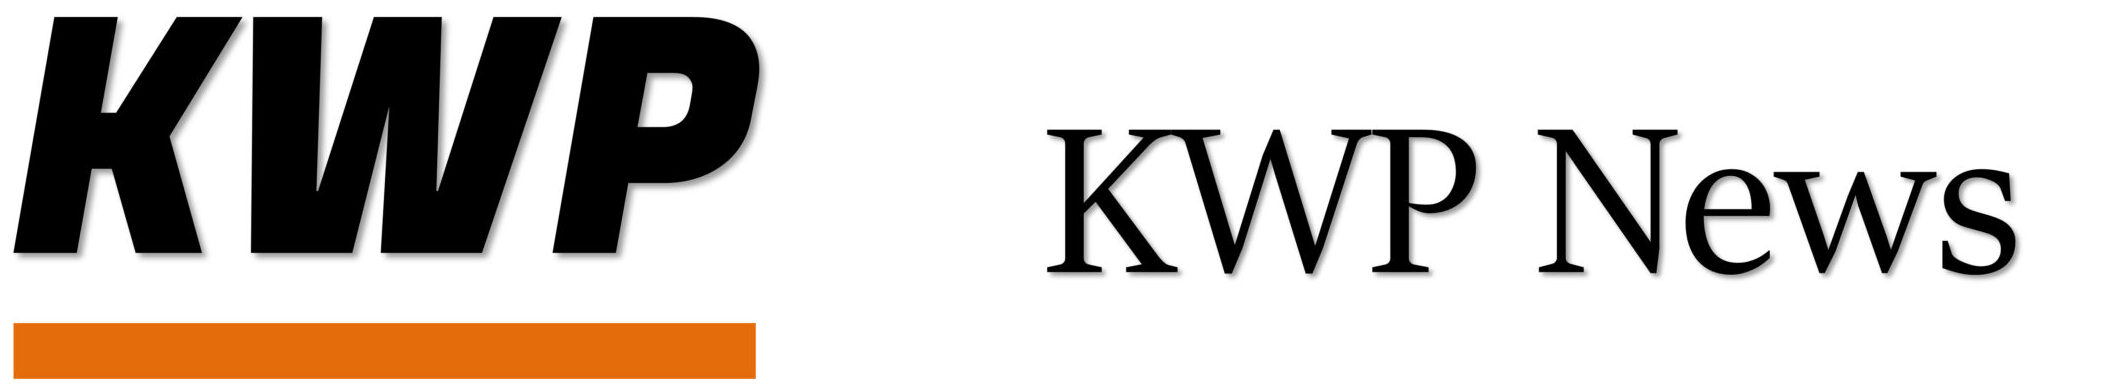 KWP News／九州と世界のニュース